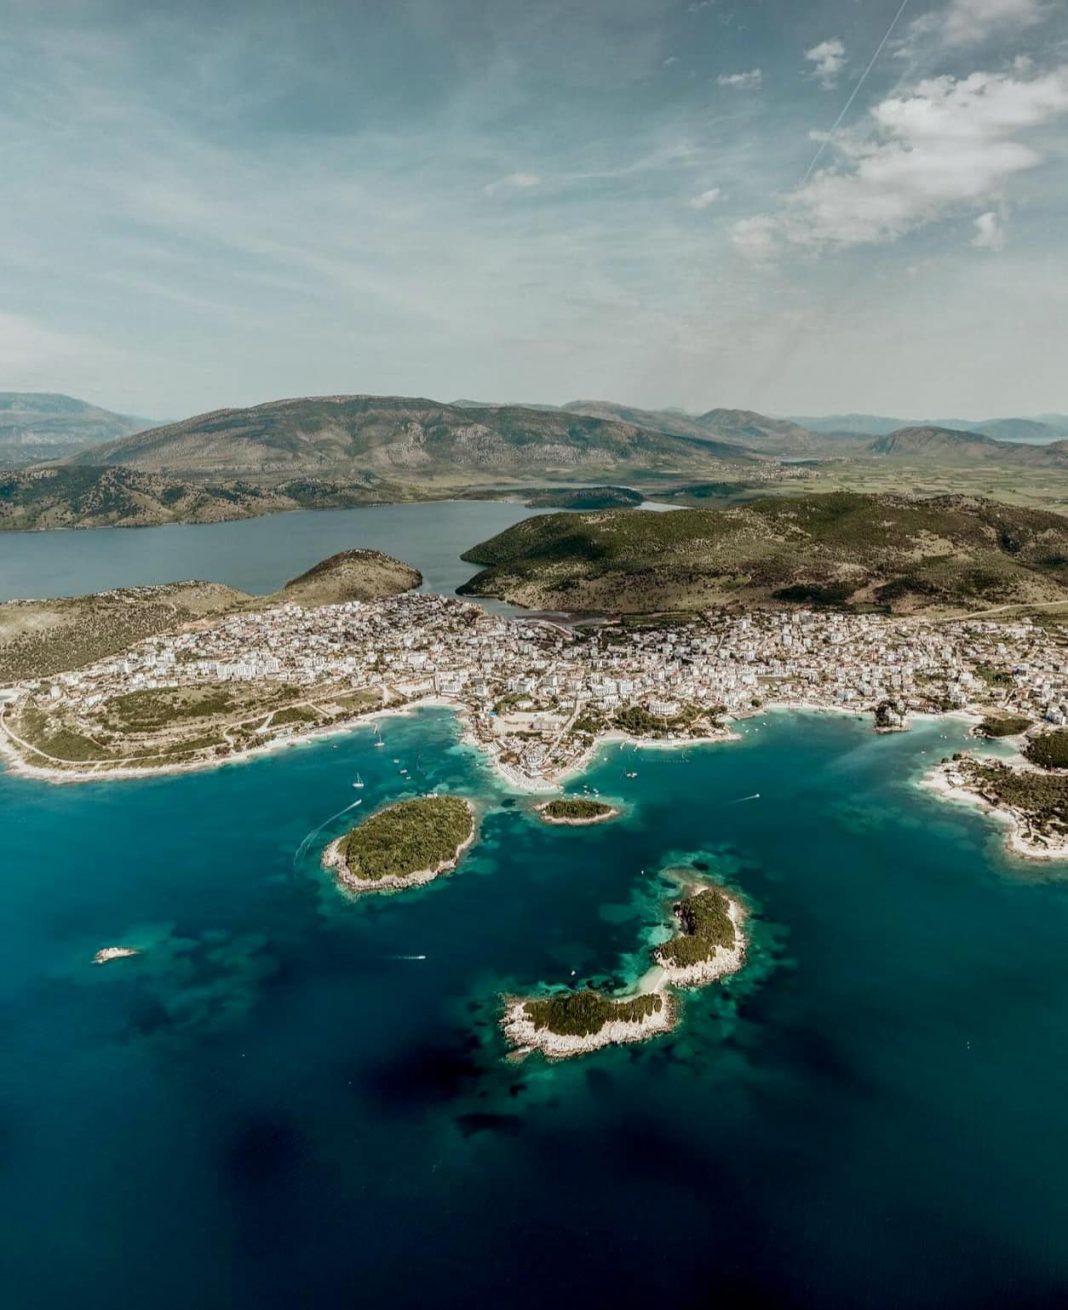 “Beautiful Albania”, Rama ndan foton nga Ksamili